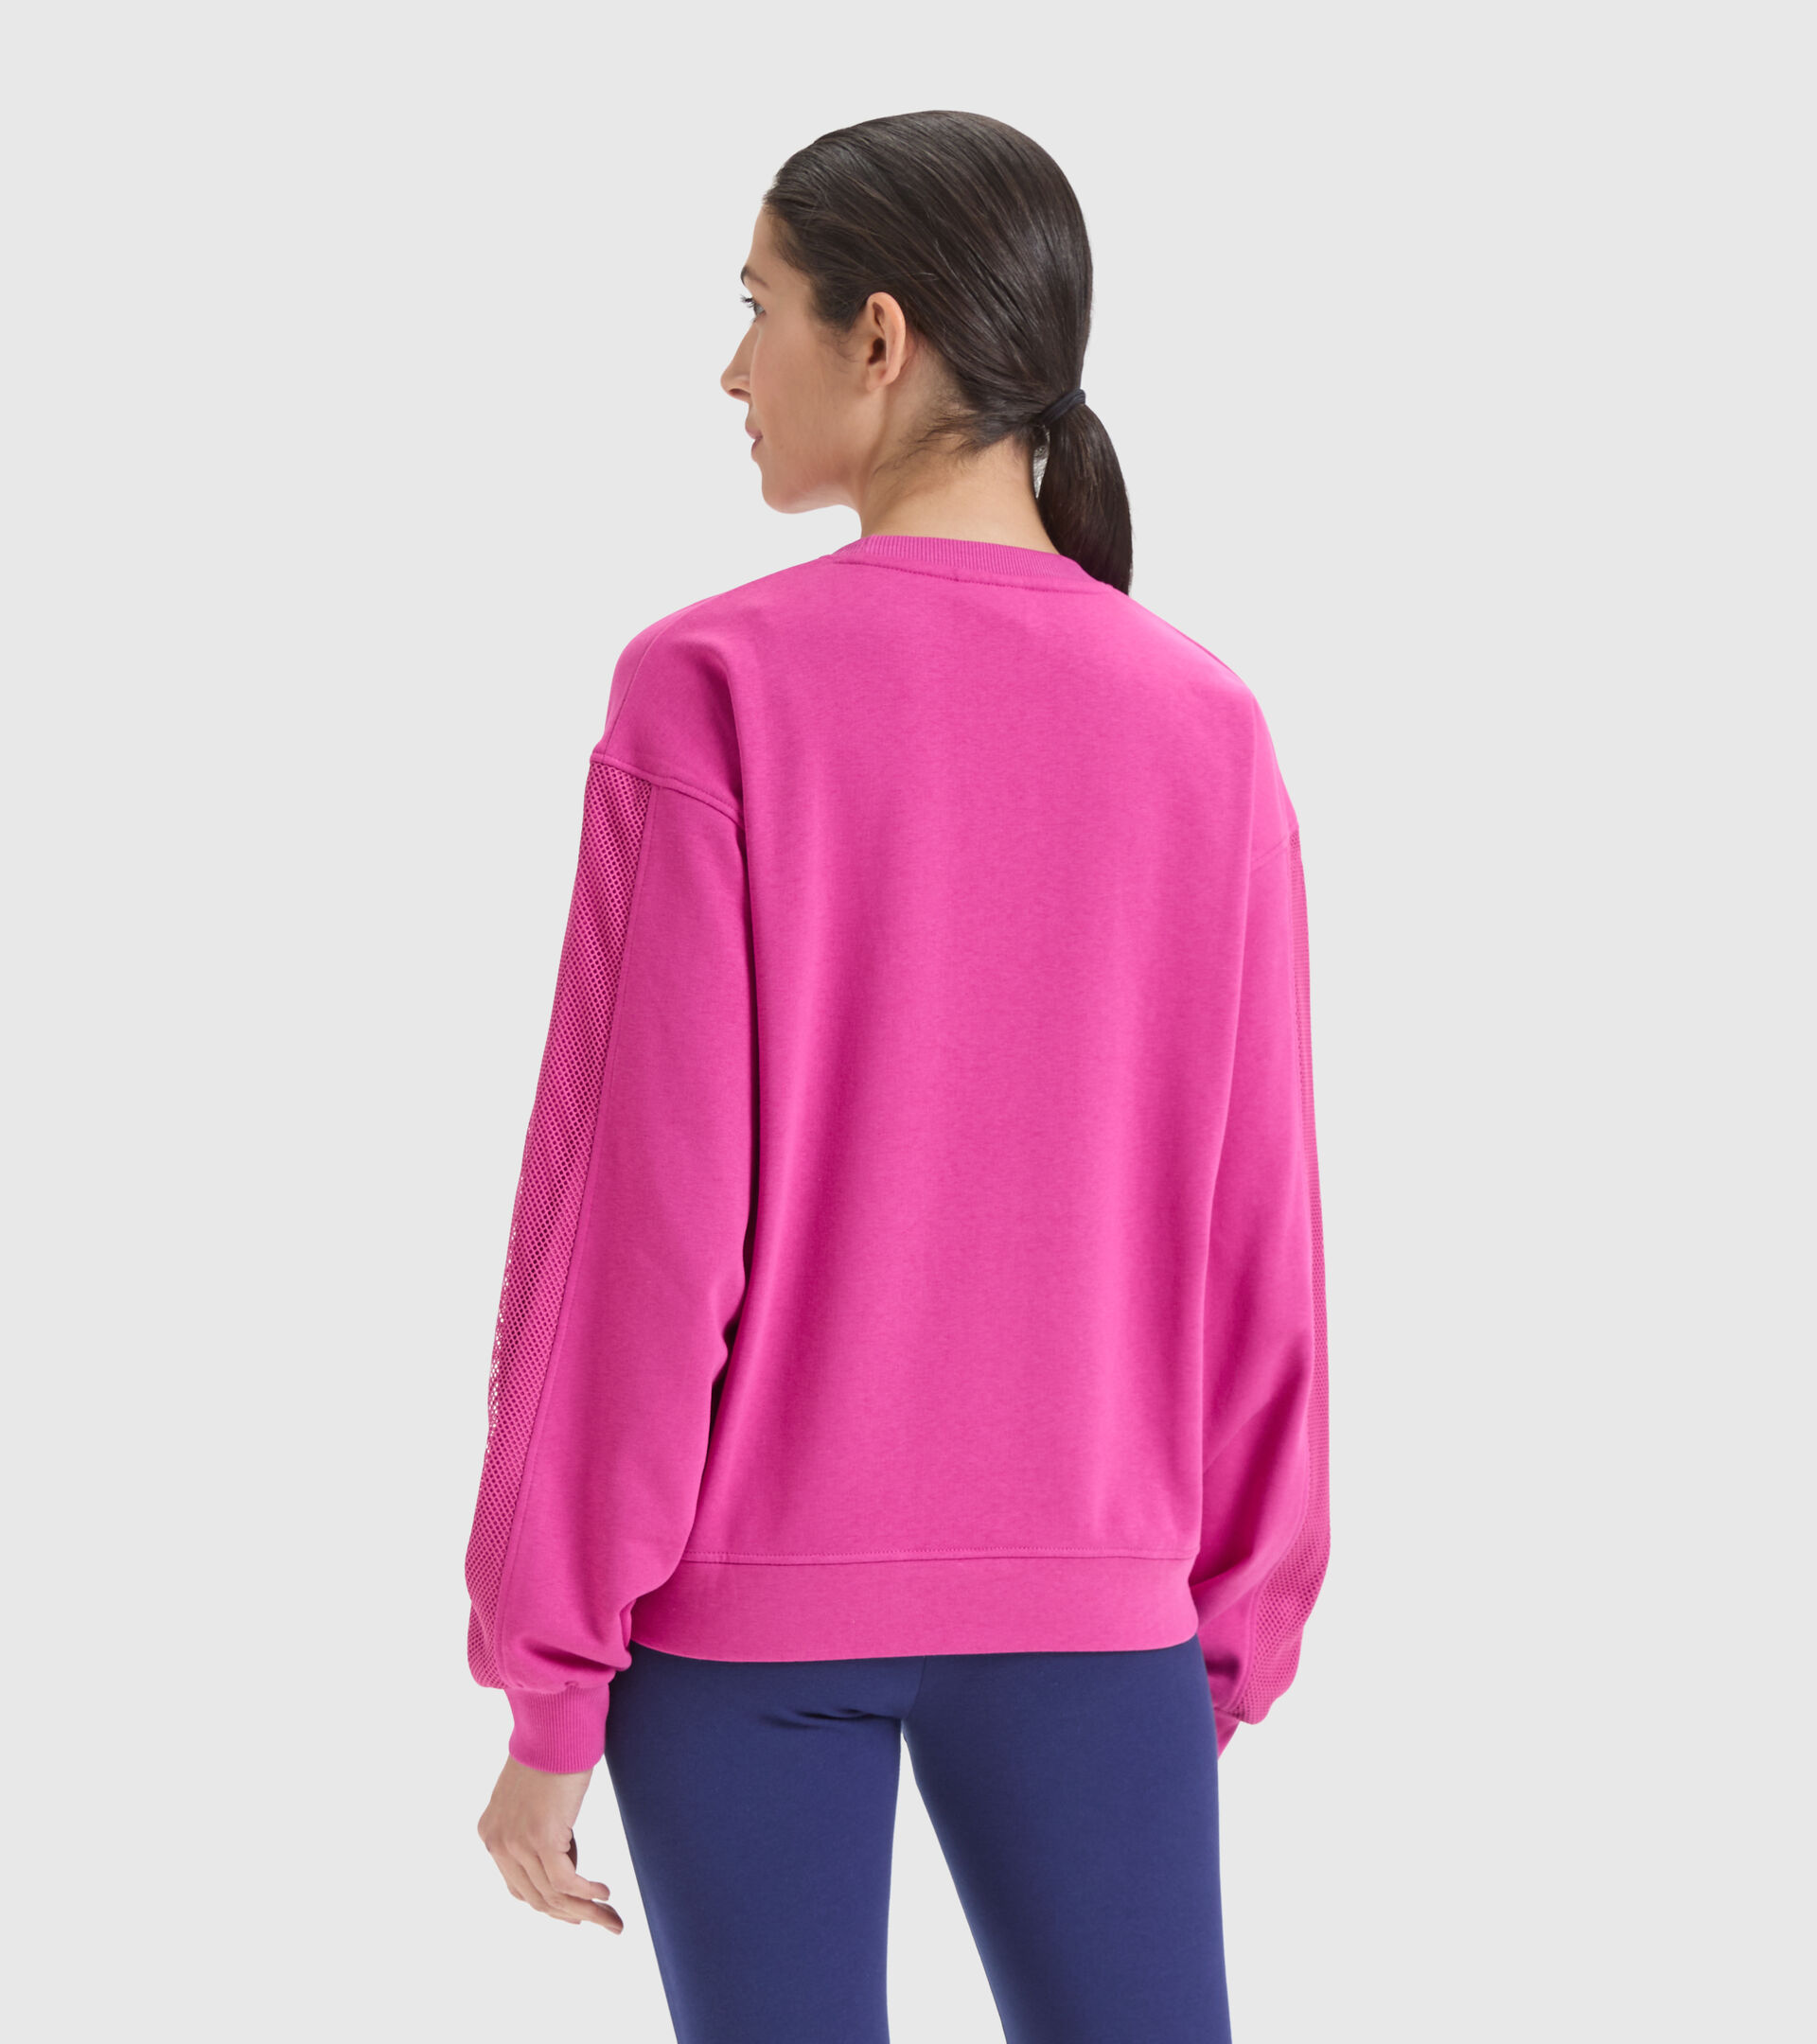 Sportliches Baumwoll-Sweatshirt - Damen L.SWEAT FLOSS ROSA IBIS - Diadora